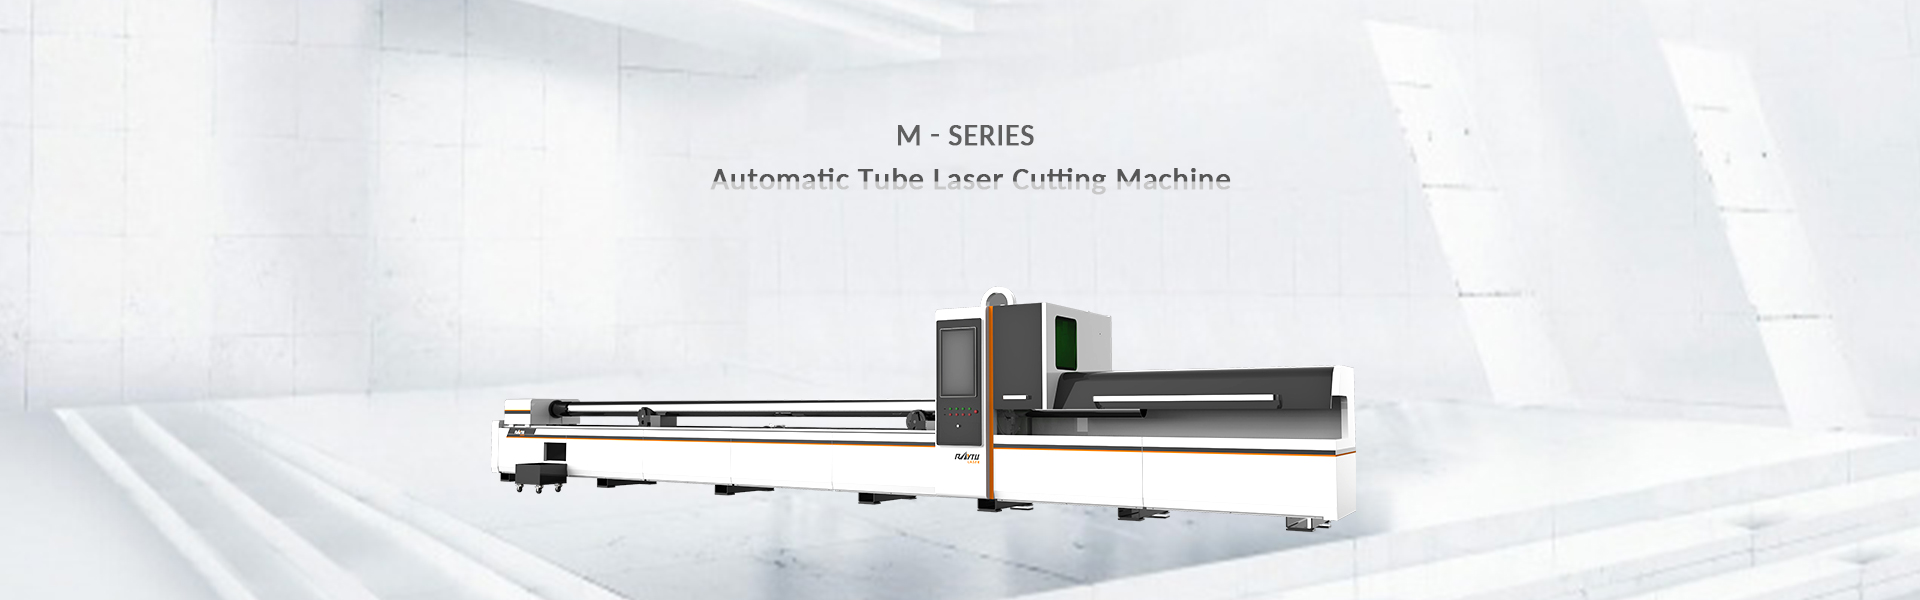 Automatic Tube Laser Cutting Machine